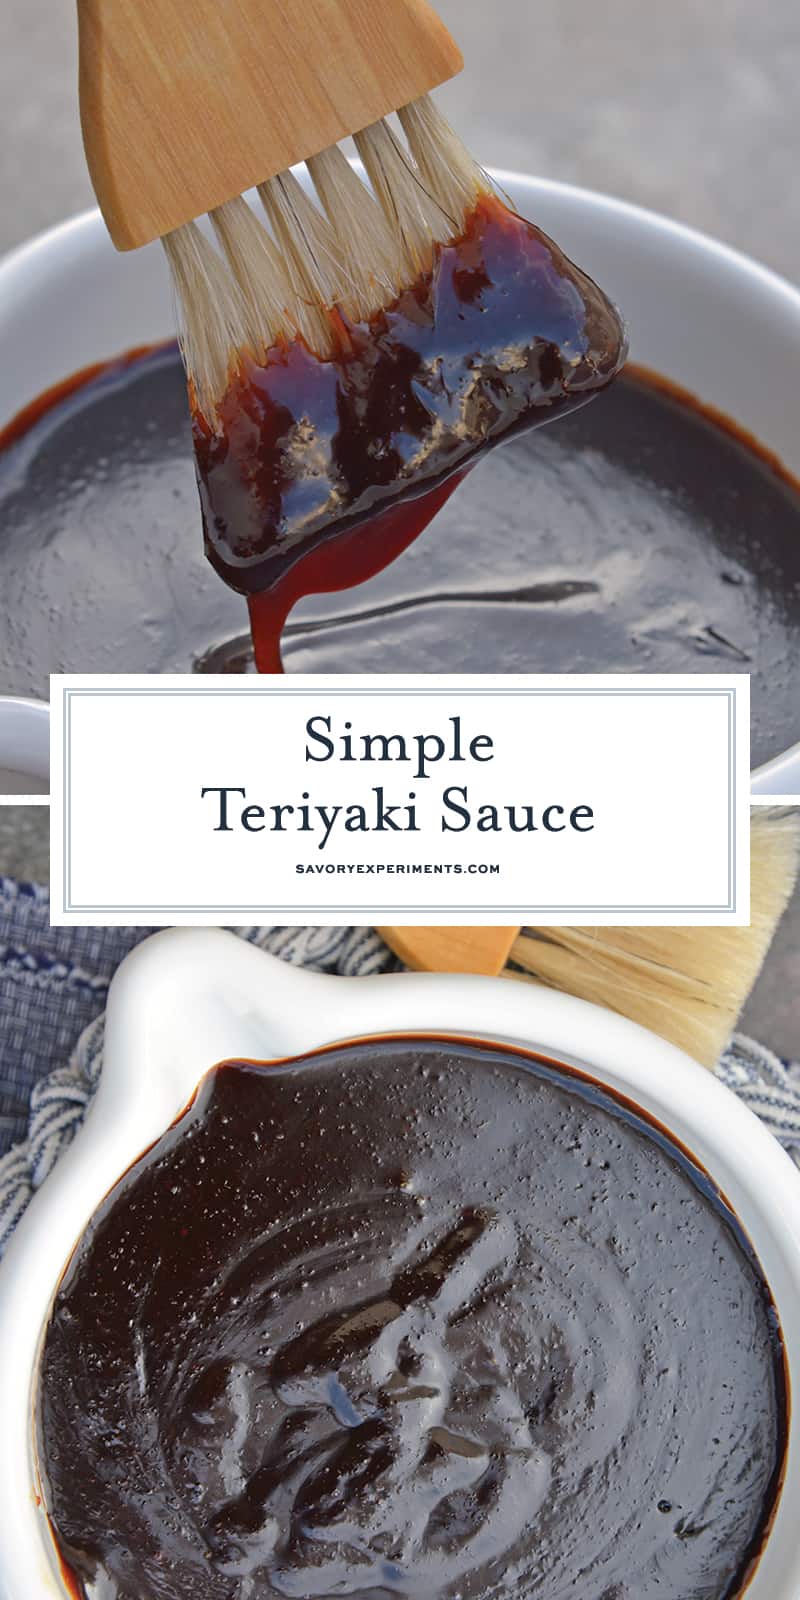 Teriyaki Sauce can be made into an easy teriyaki marinade or glaze. Perfect for teriyaki chicken, easy stir fry recipe or even making homemade beef jerky. #teriyakisauce #chickenteriyaki www.savoryexperiments.com 